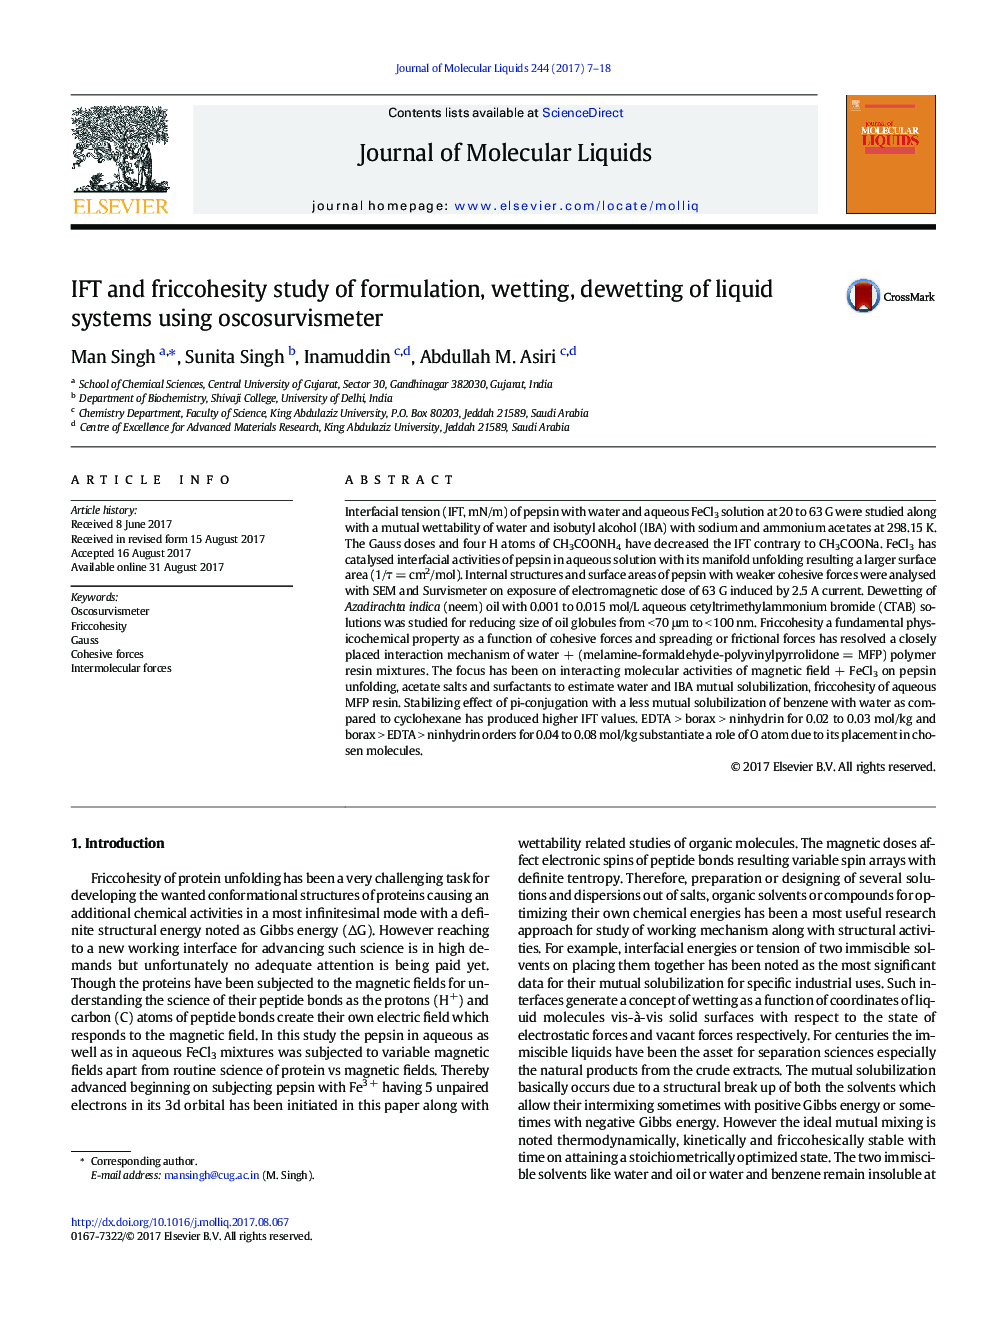 IFT and friccohesity study of formulation, wetting, dewetting of liquid systems using oscosurvismeter